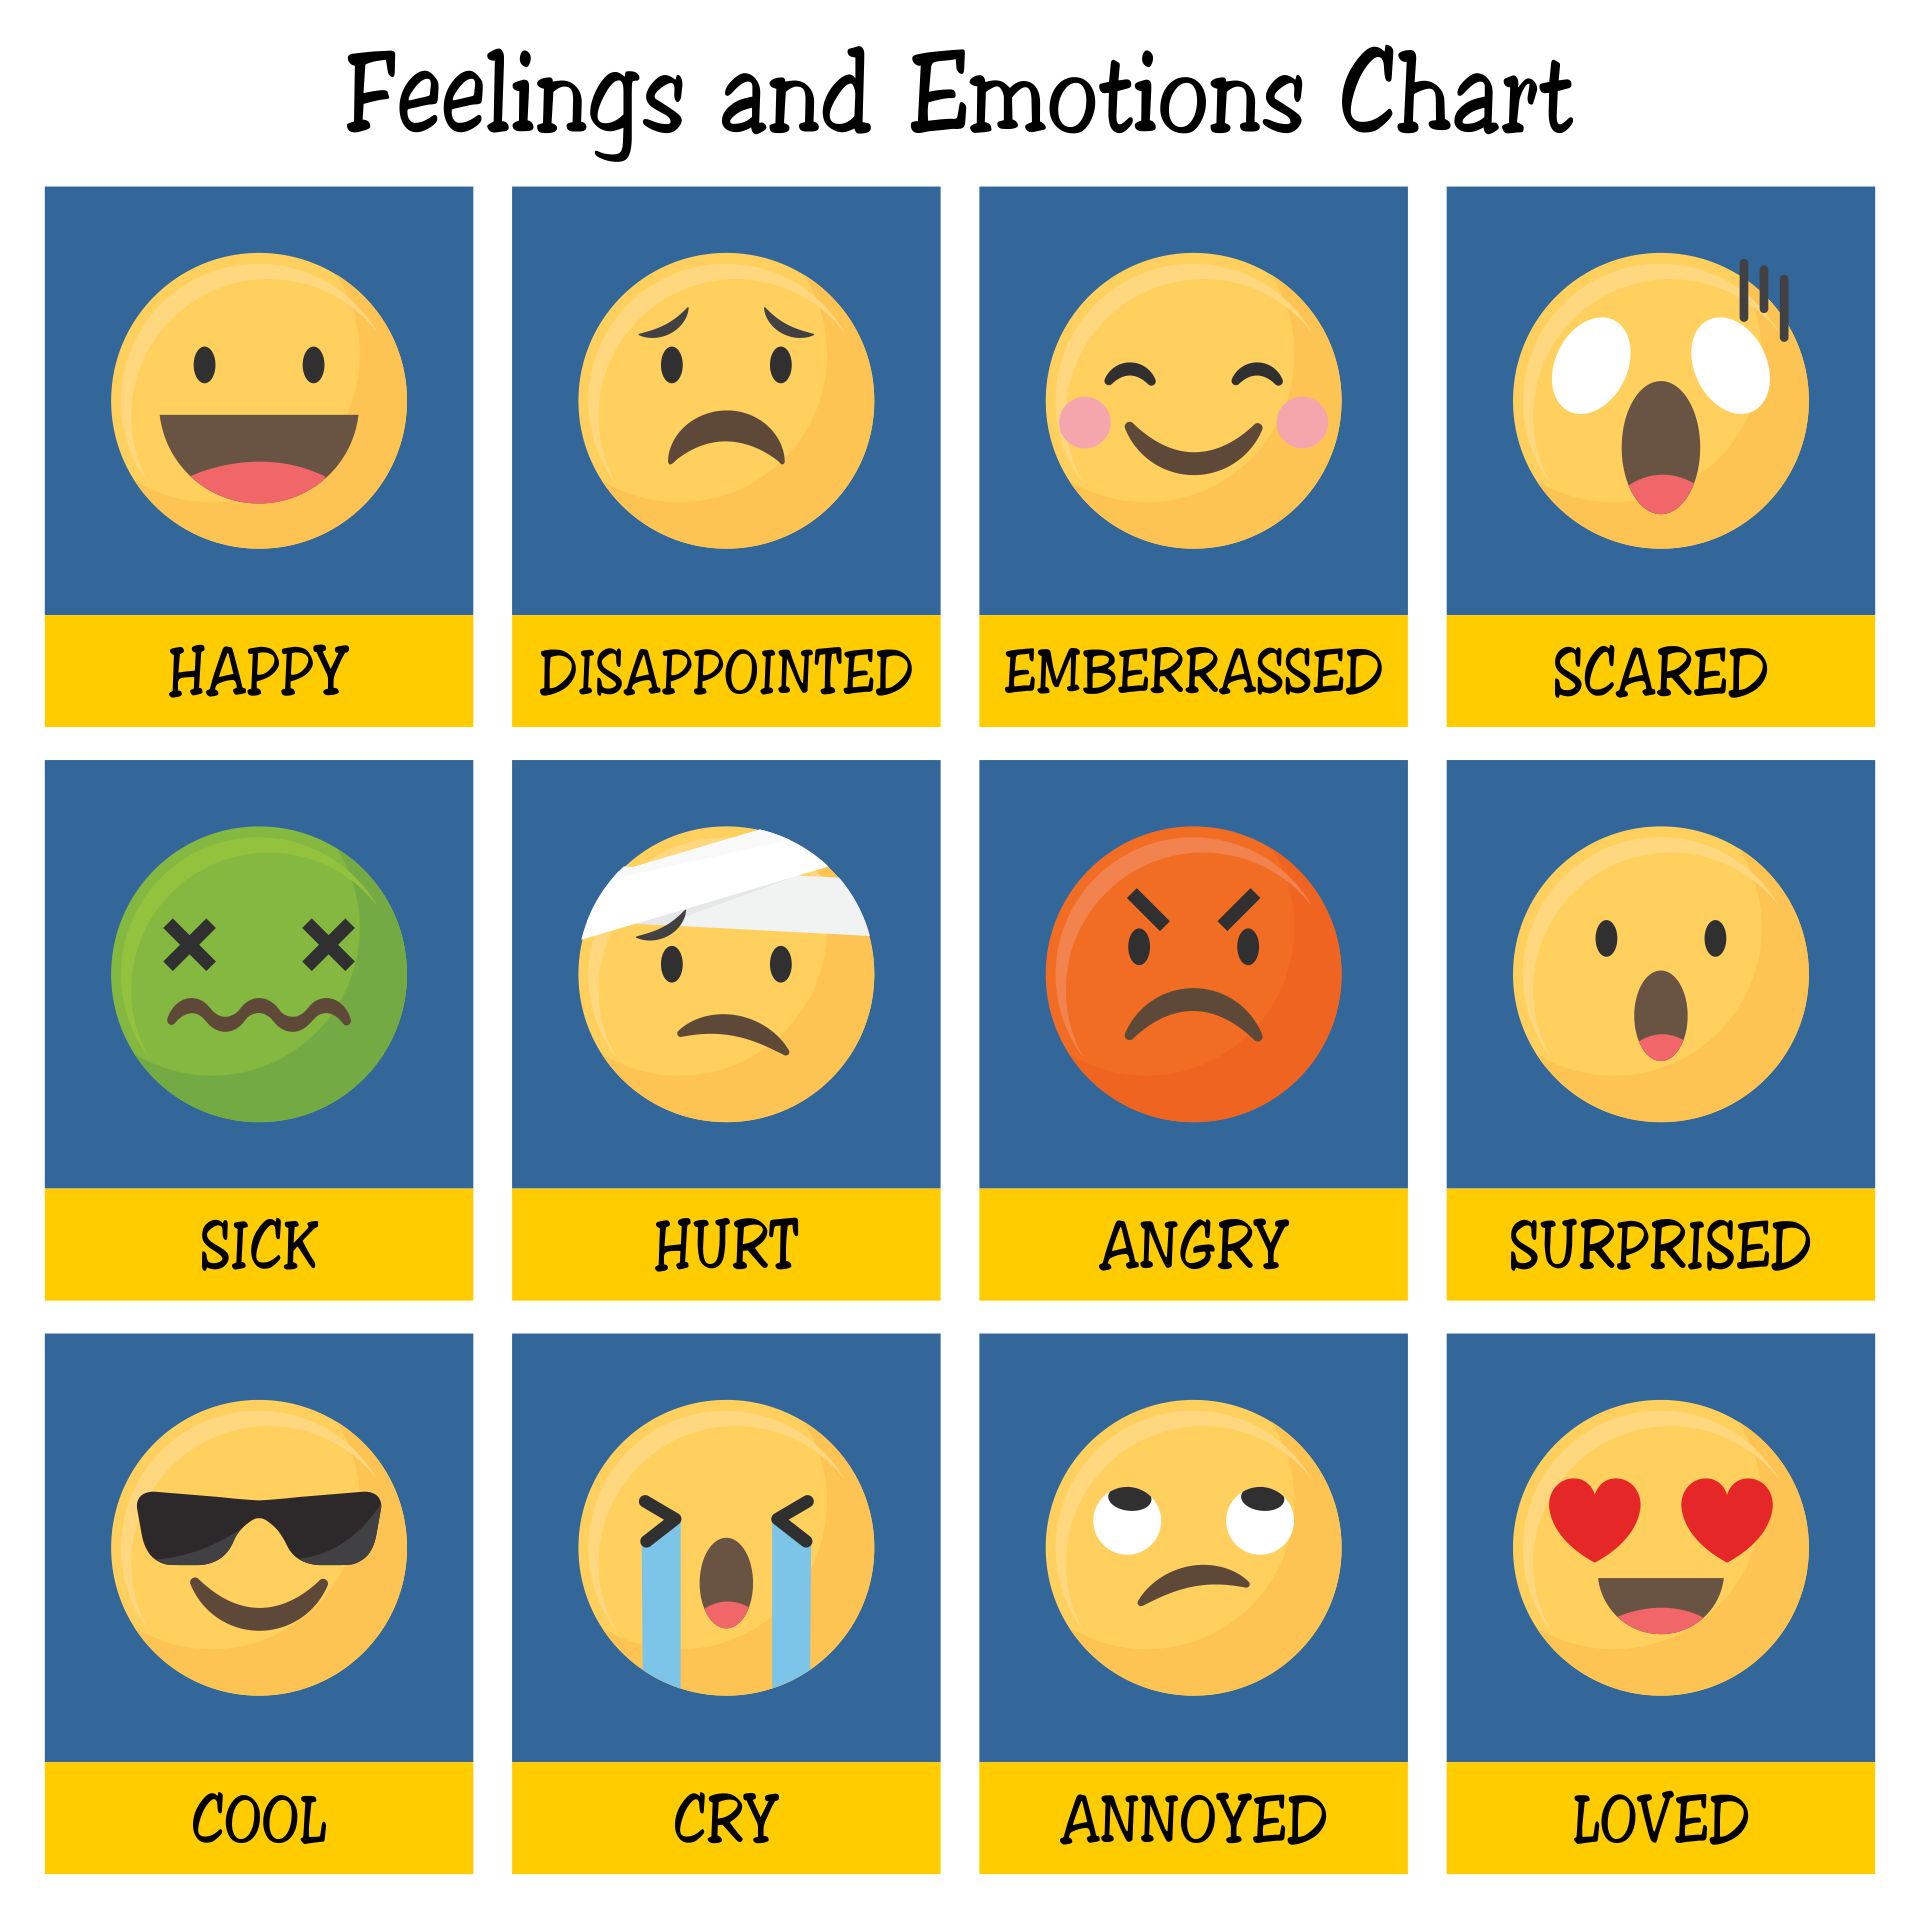 Free Printable Emotion Faces